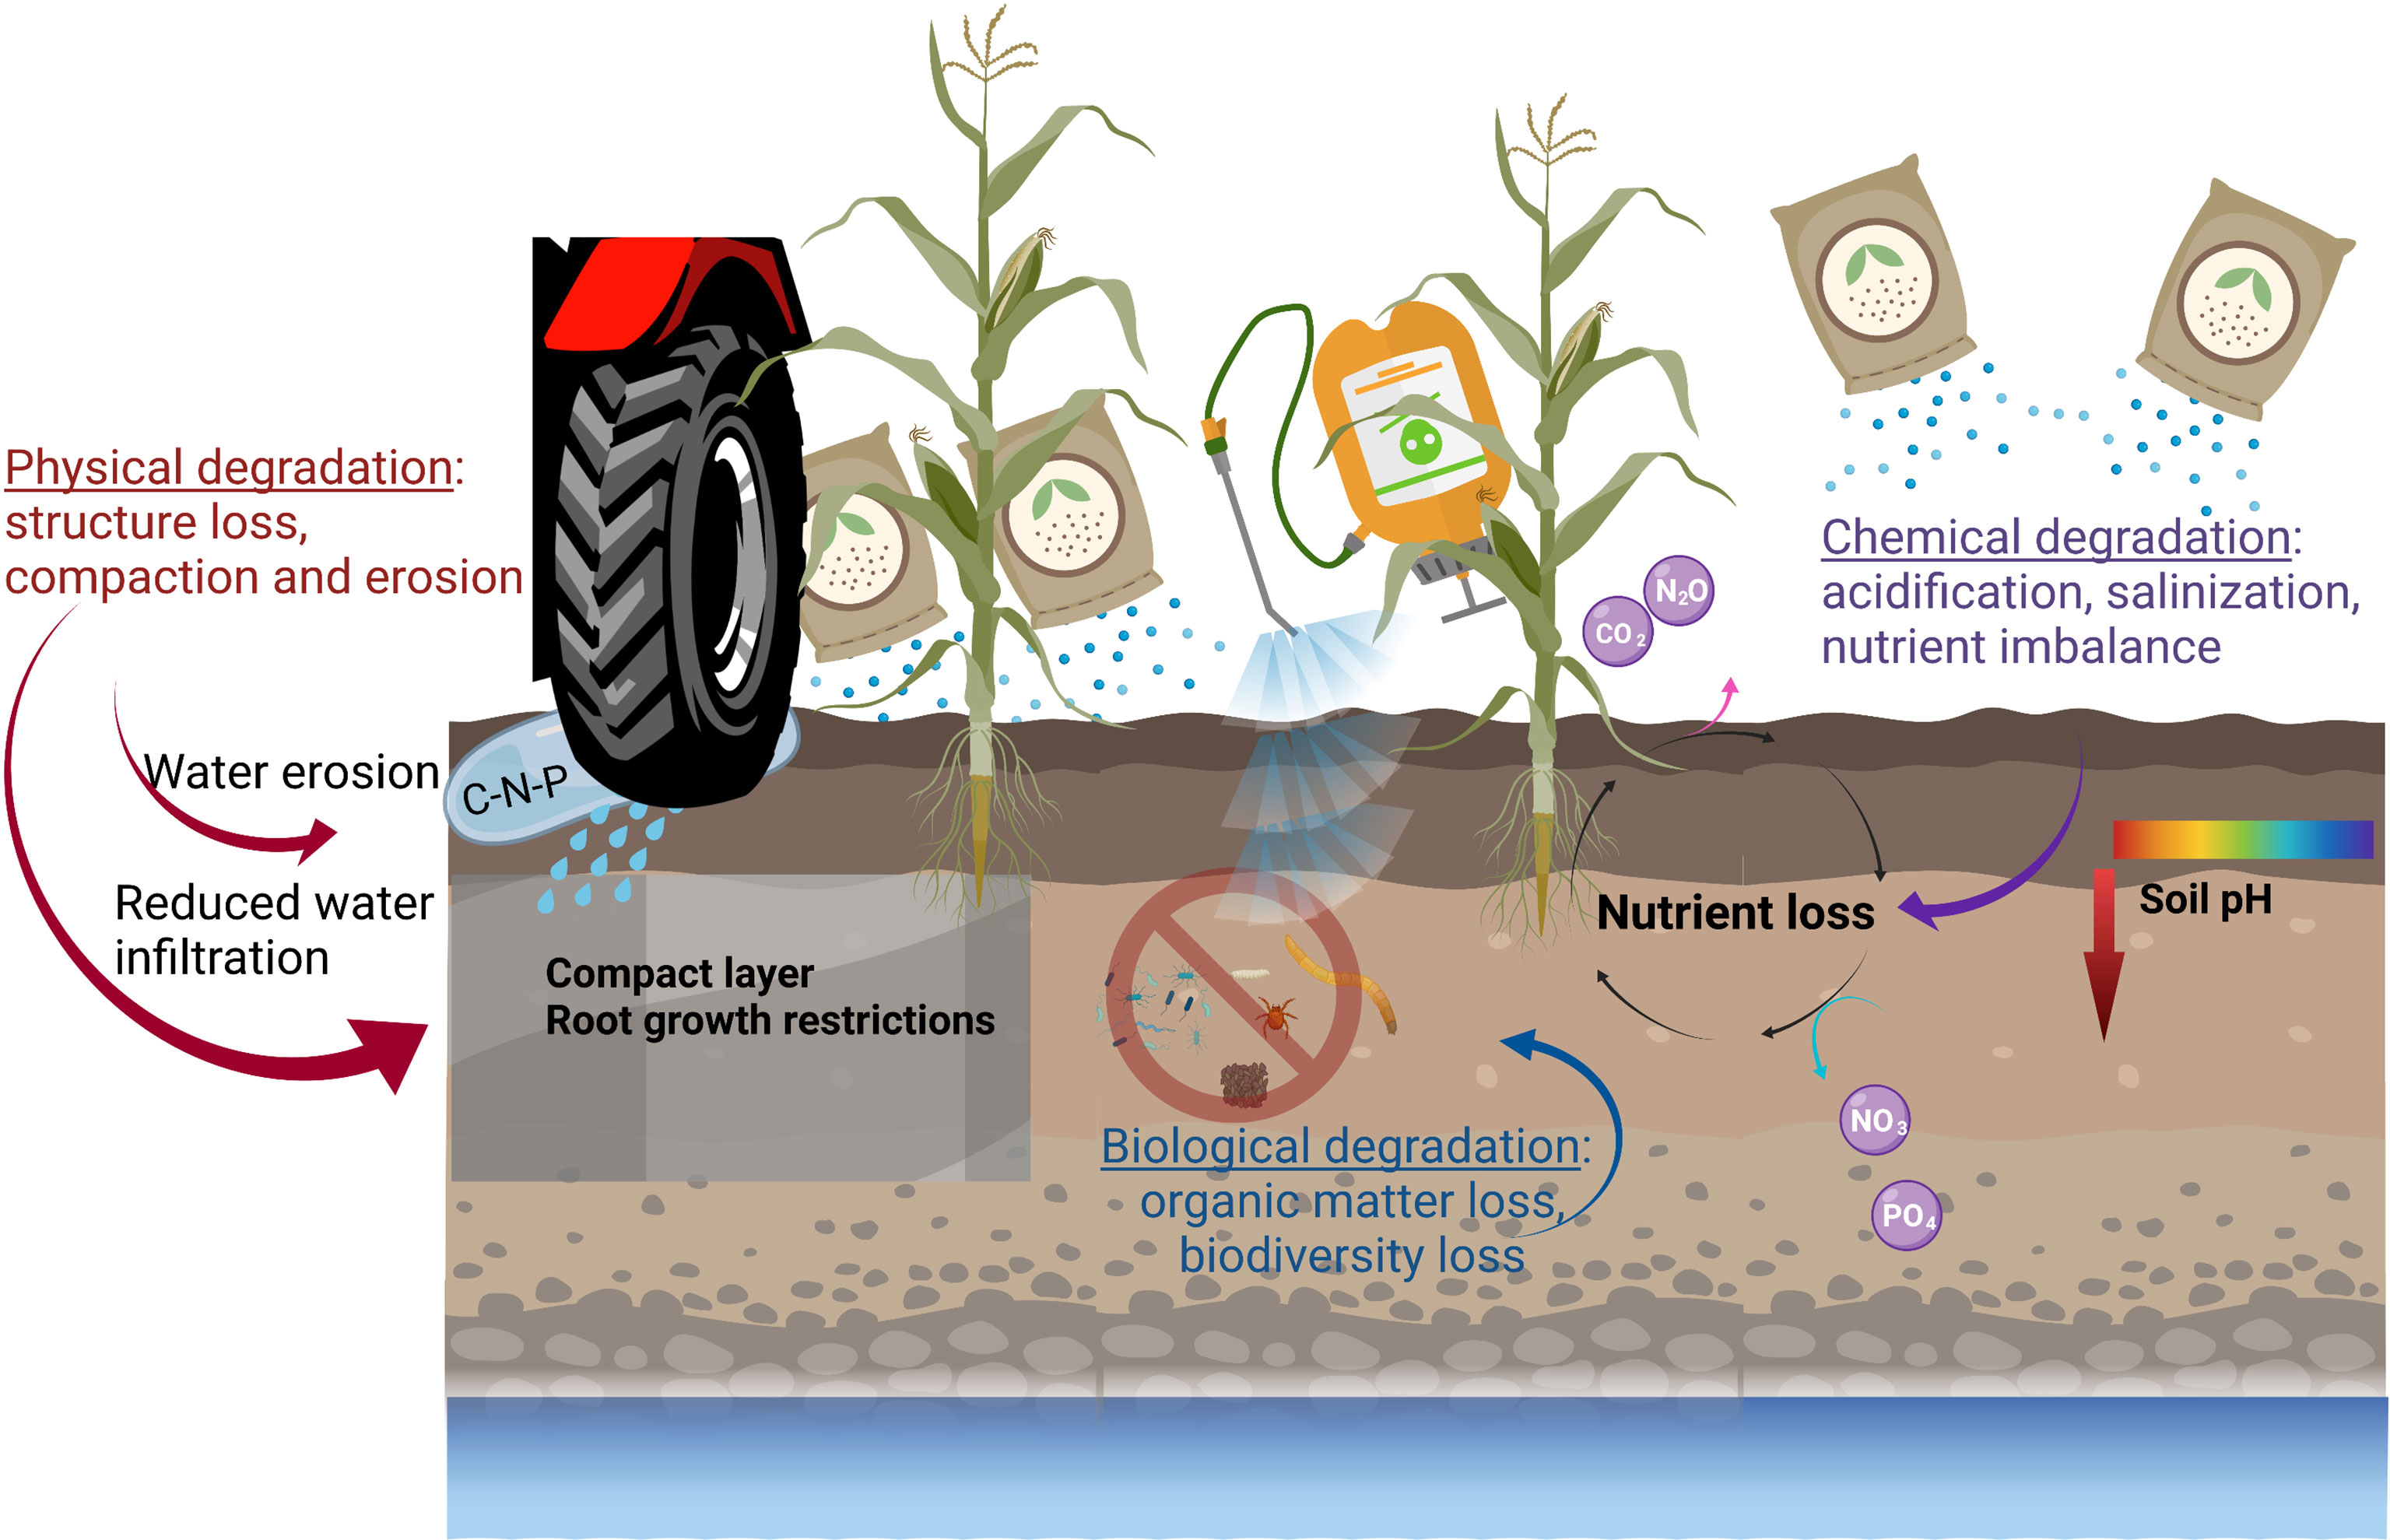 SOIL - Quality assessment of meta-analyses on soil organic carbon